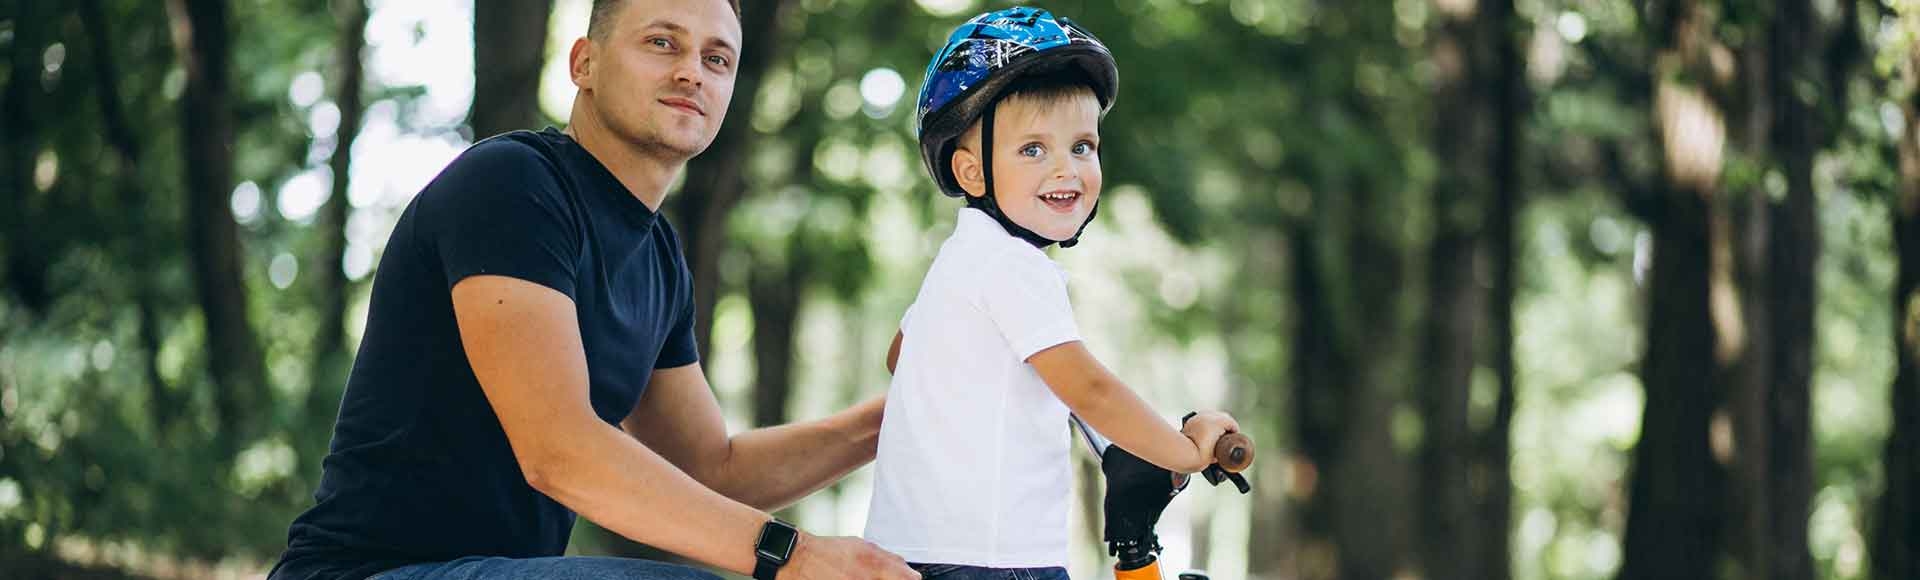 Bike Safety for Parents